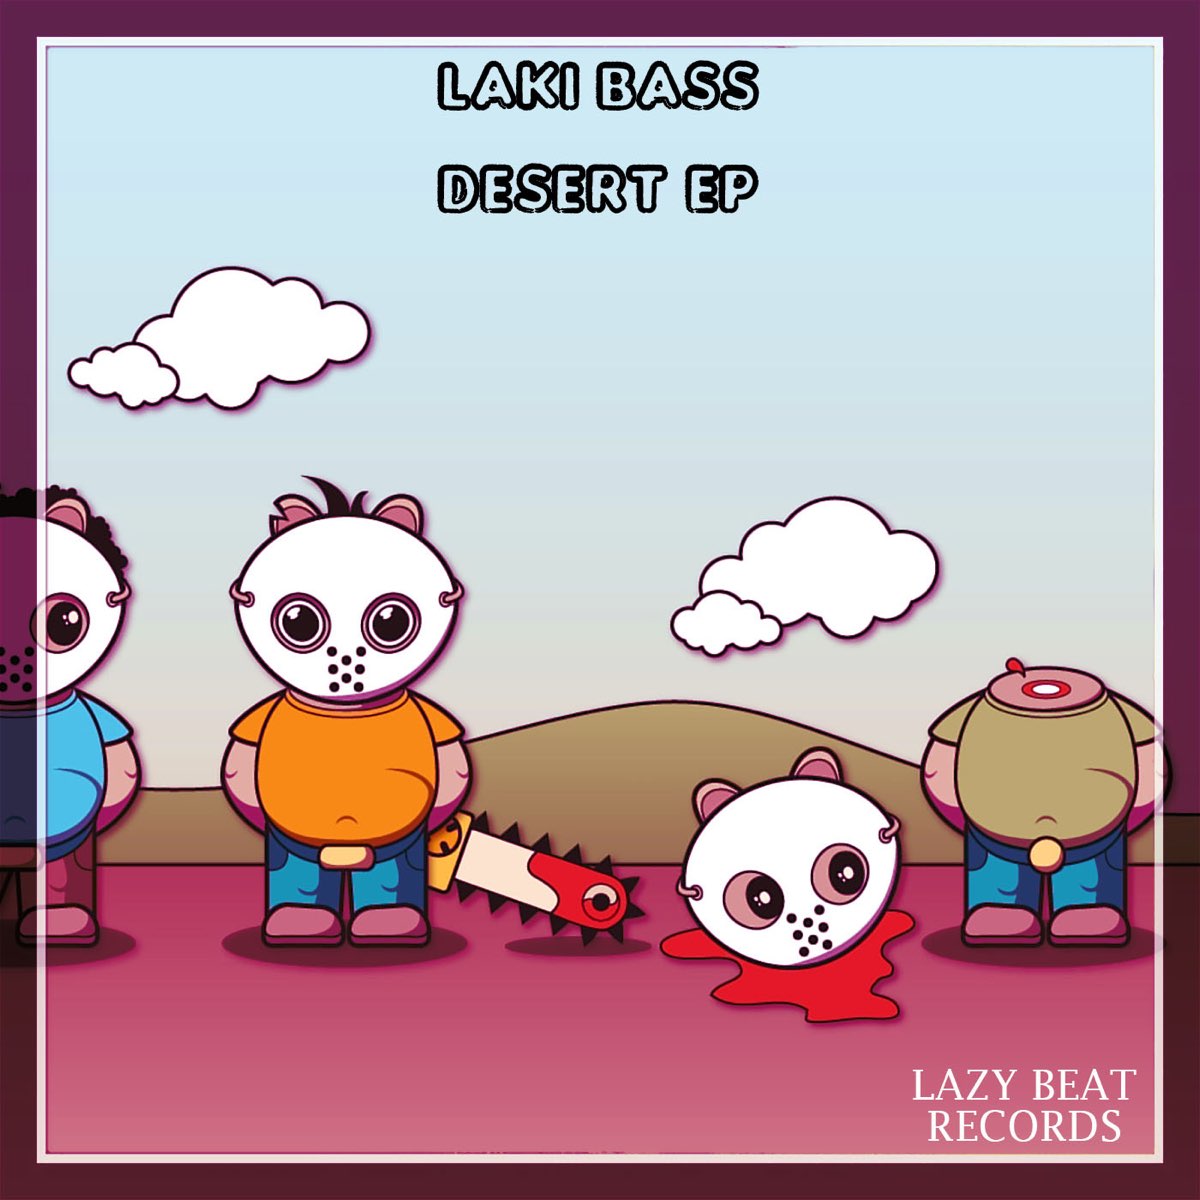 Laki bass. Desert Bass. Laki Bass Desert House. Desert песня laki Bass похожая на песню.